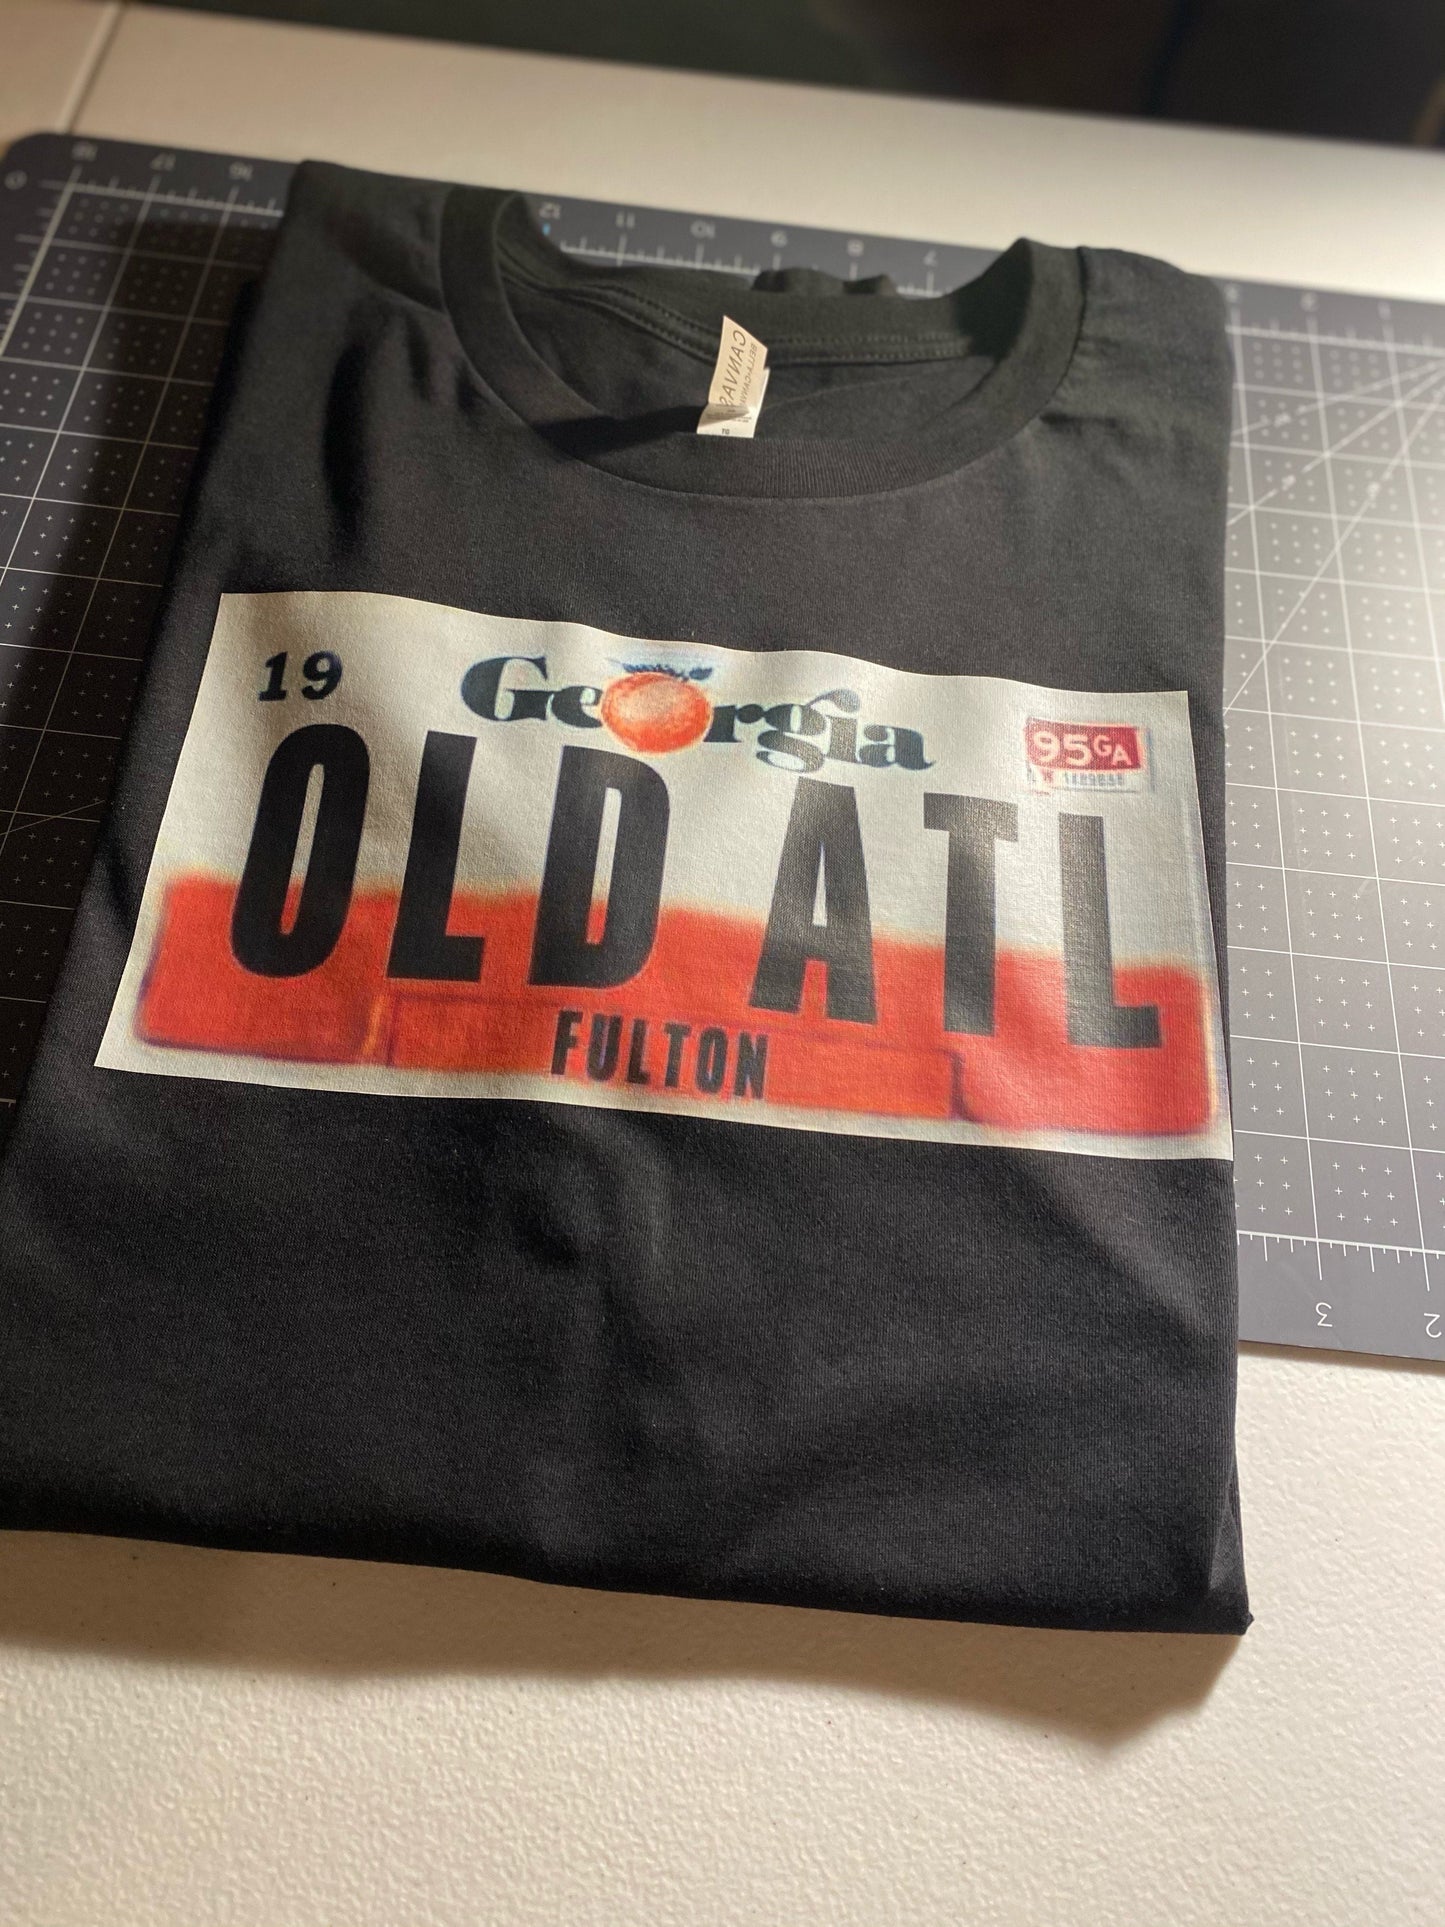 OLD ATL - Fulton County T-Shirt, Georgia Peach 1990s Shirt B1ack By Design LLC 